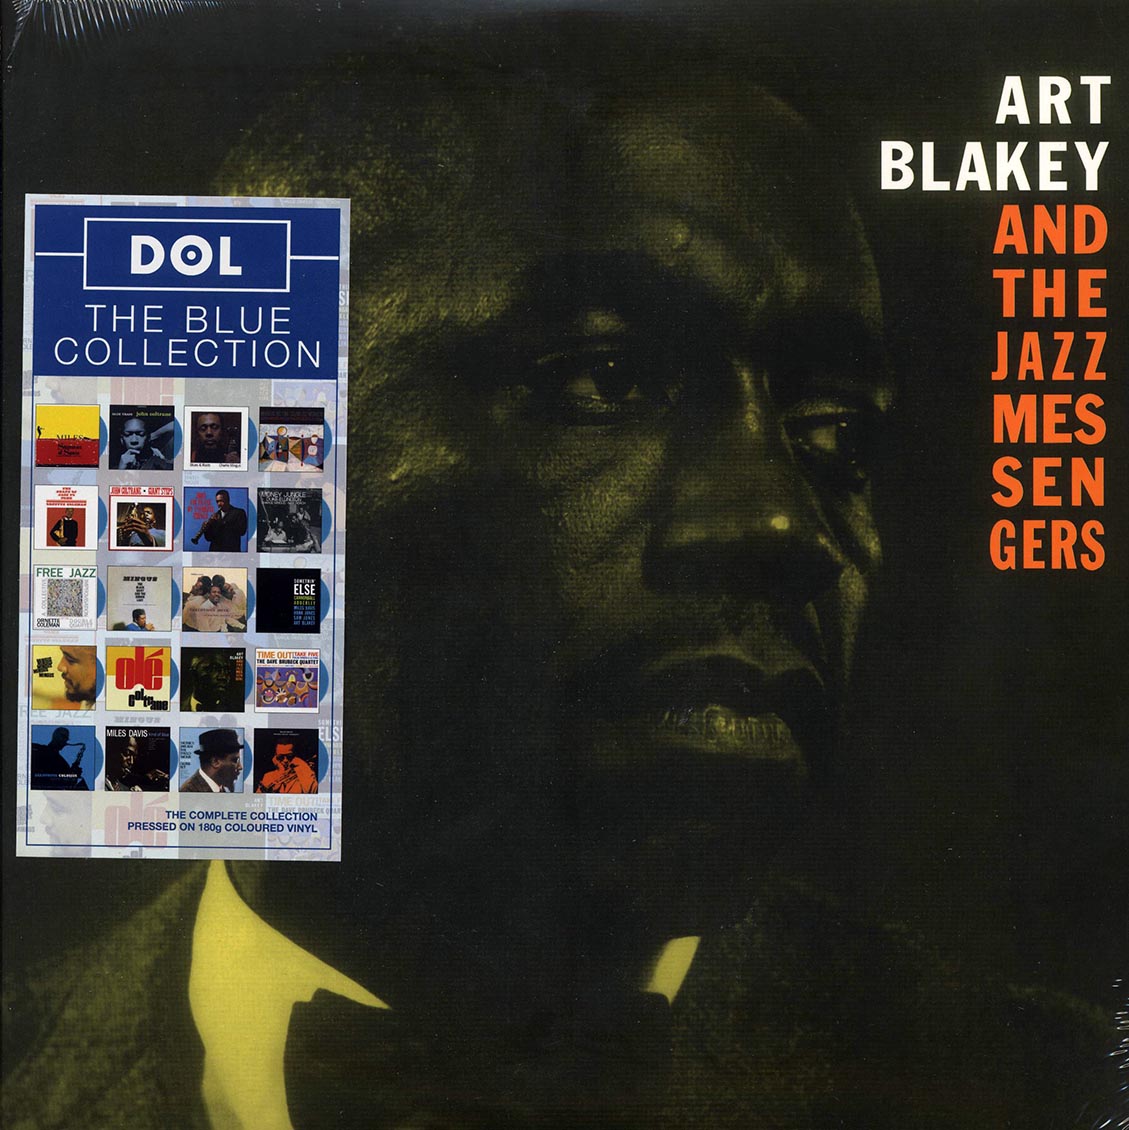 Art Blakey & The Jazz Messengers - Art Blakey & The Jazz Messengers (180g) (blue vinyl) - Vinyl LP